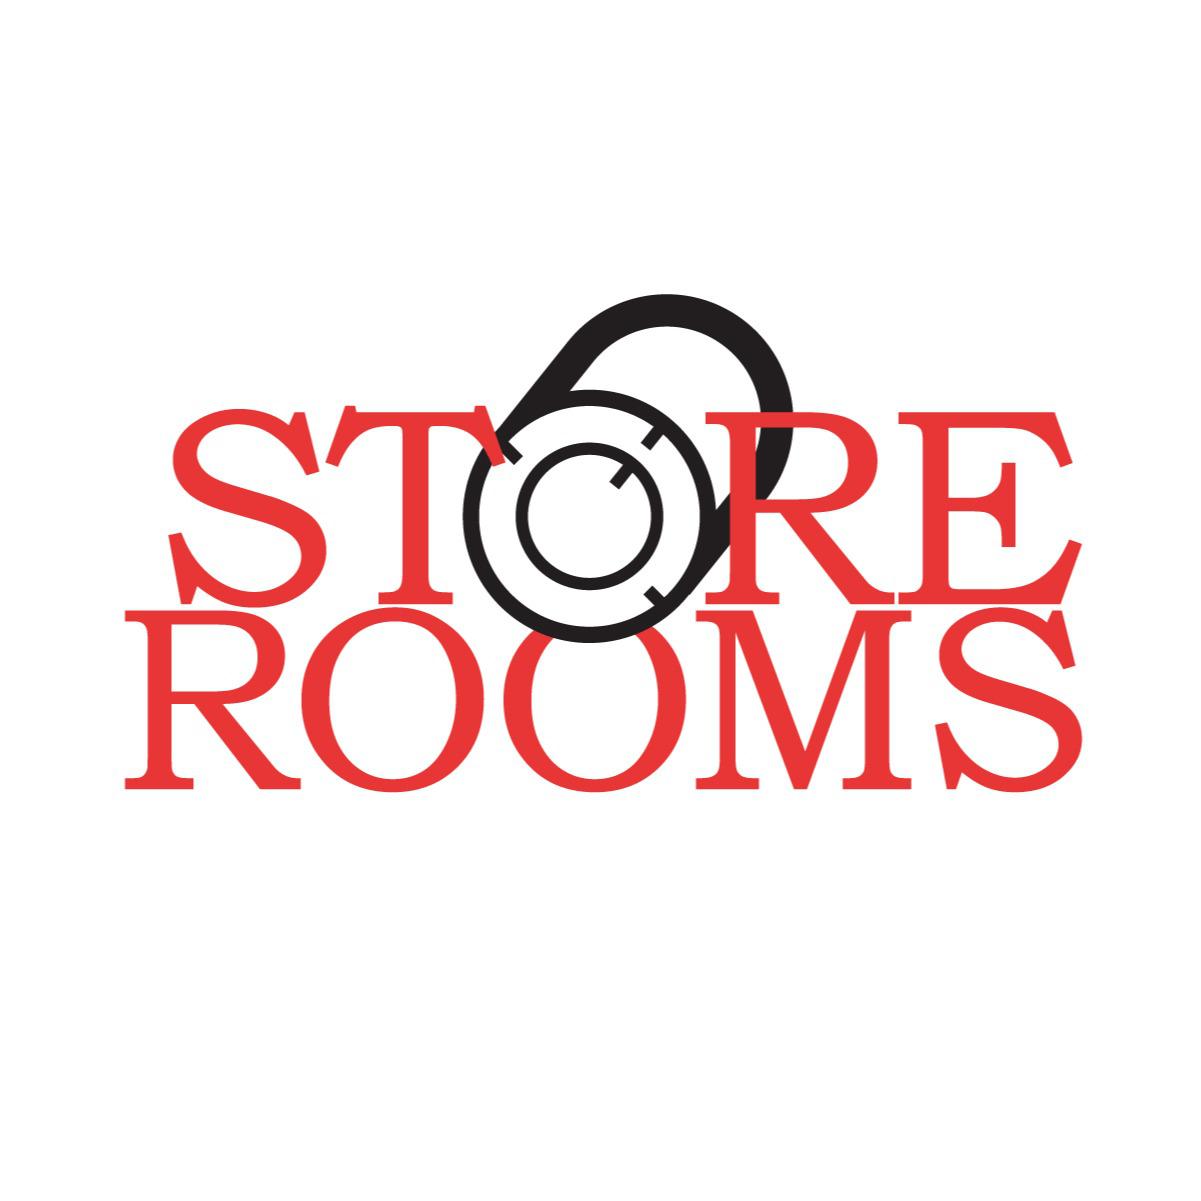 Store Rooms Self Storage Marlborough (508)802-5160